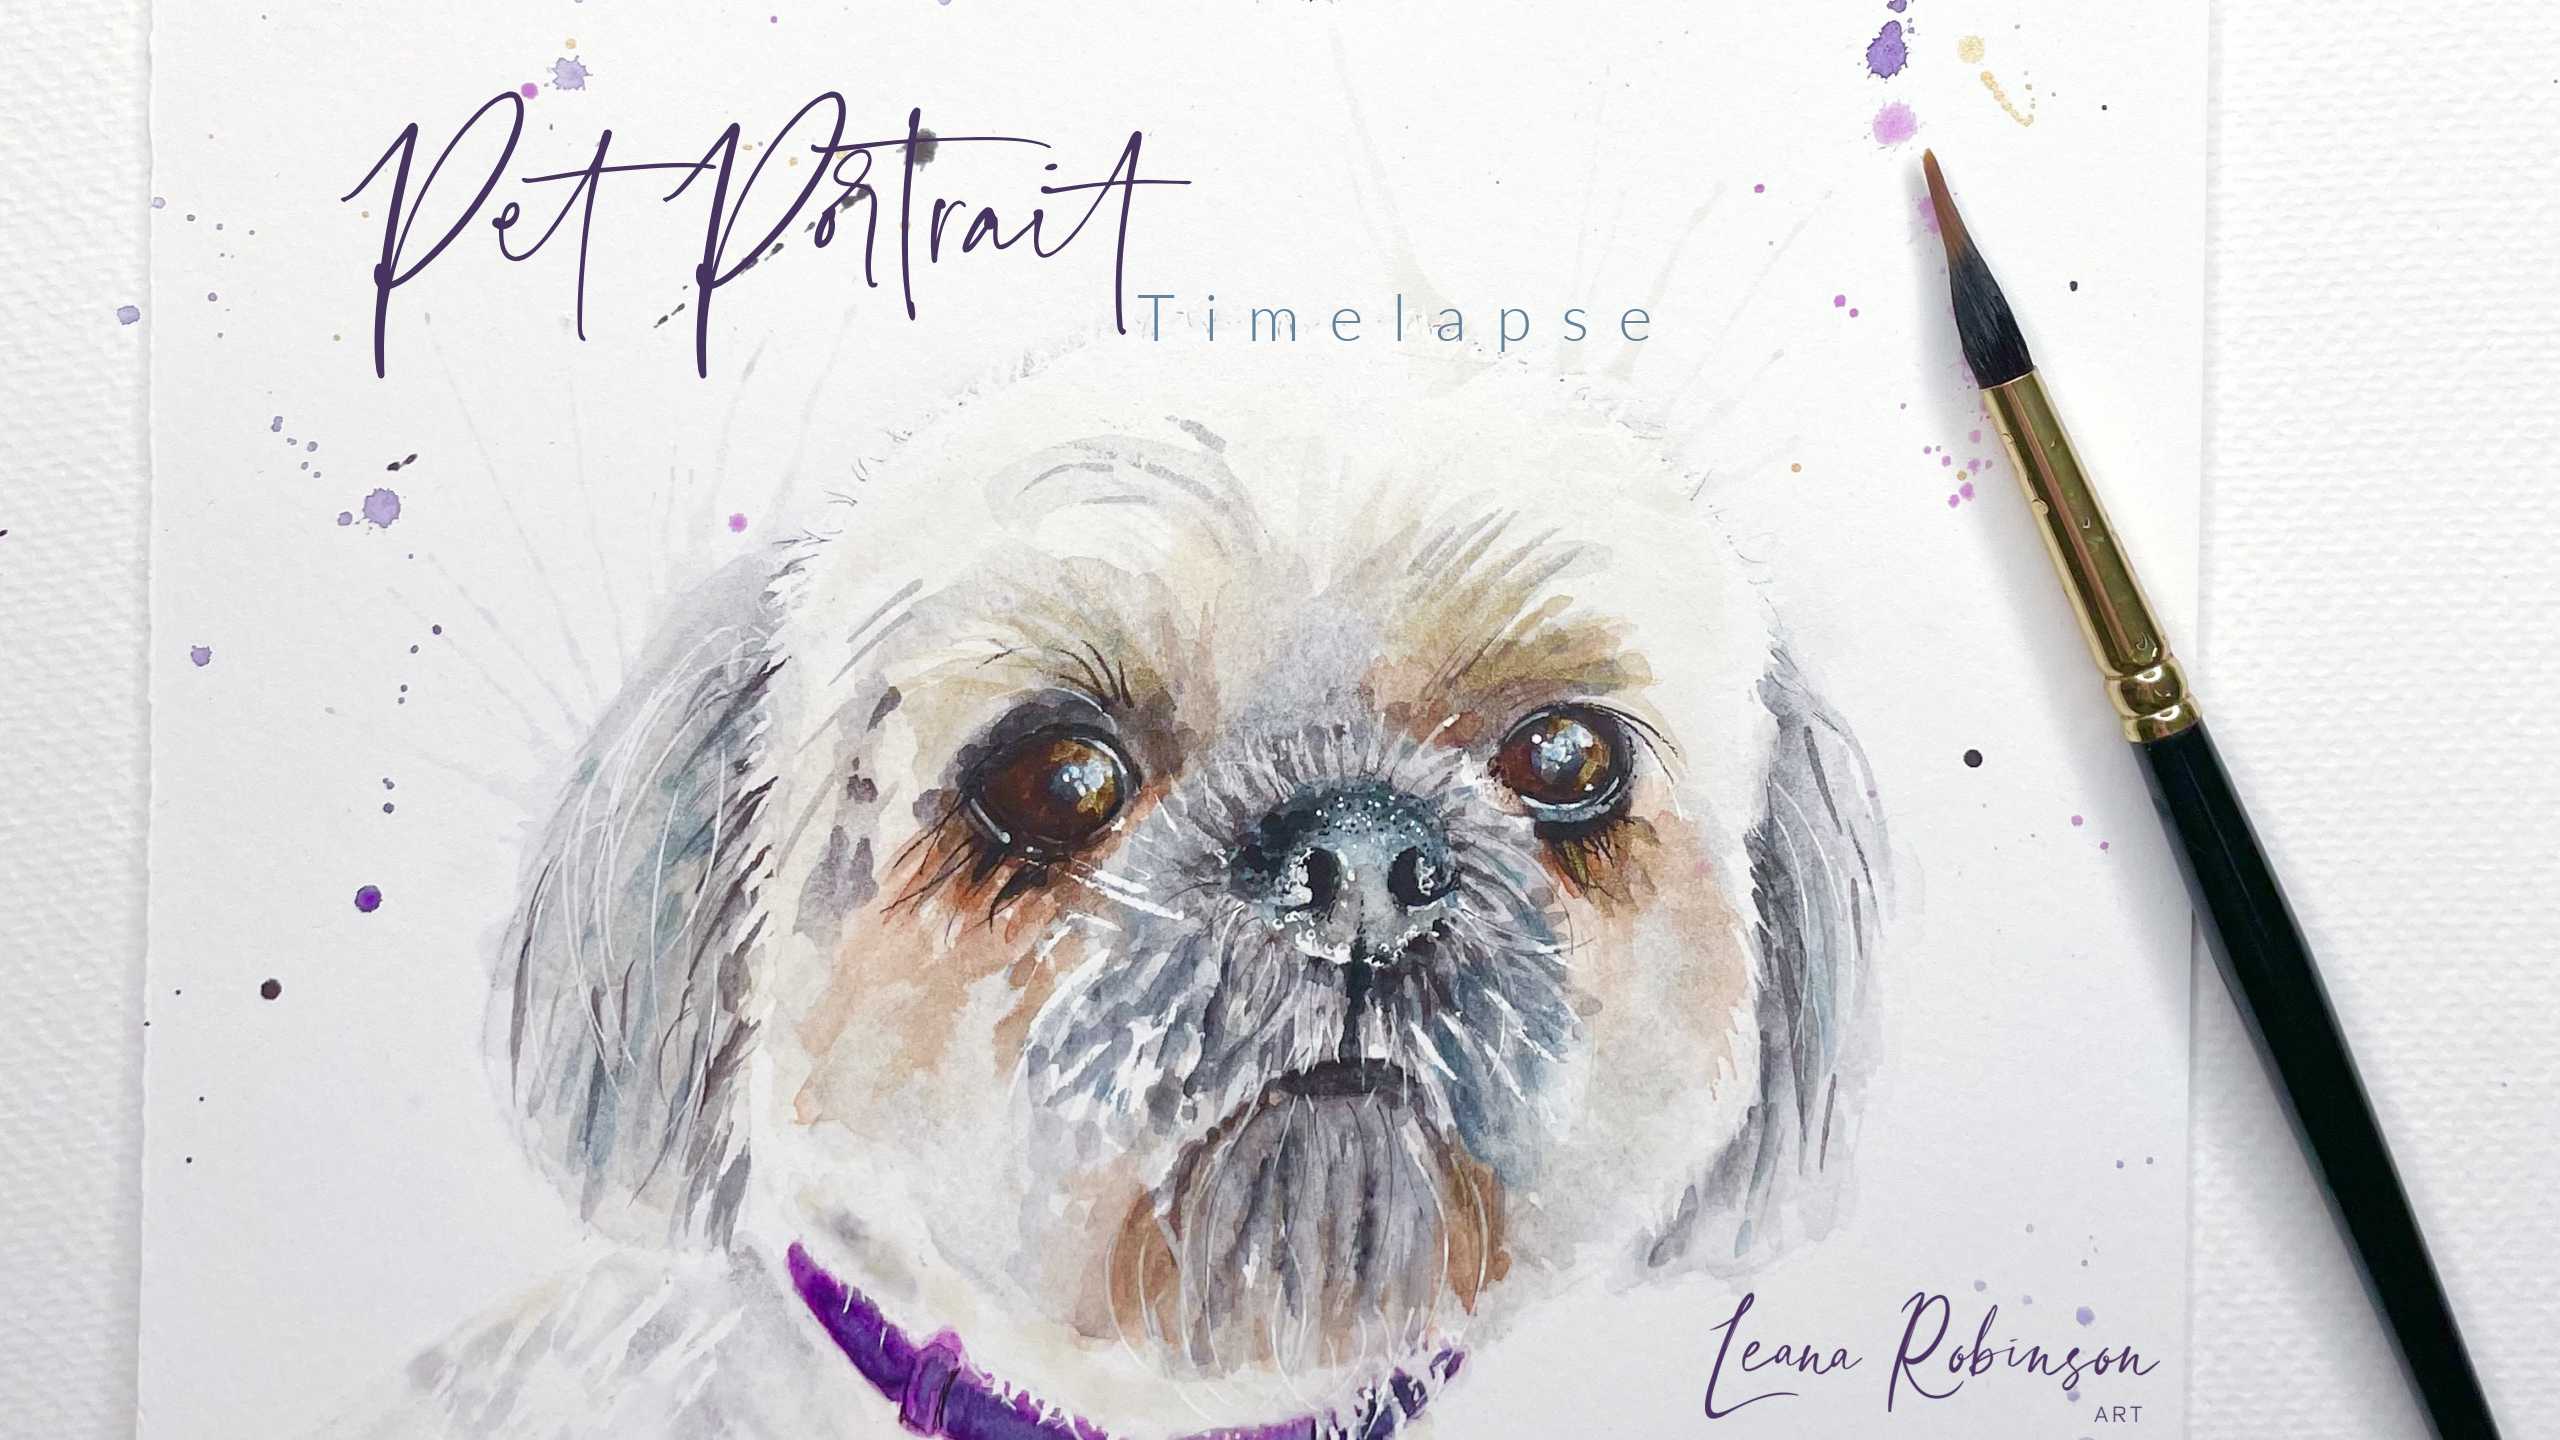 Load video: Timelapse of a pet portrait